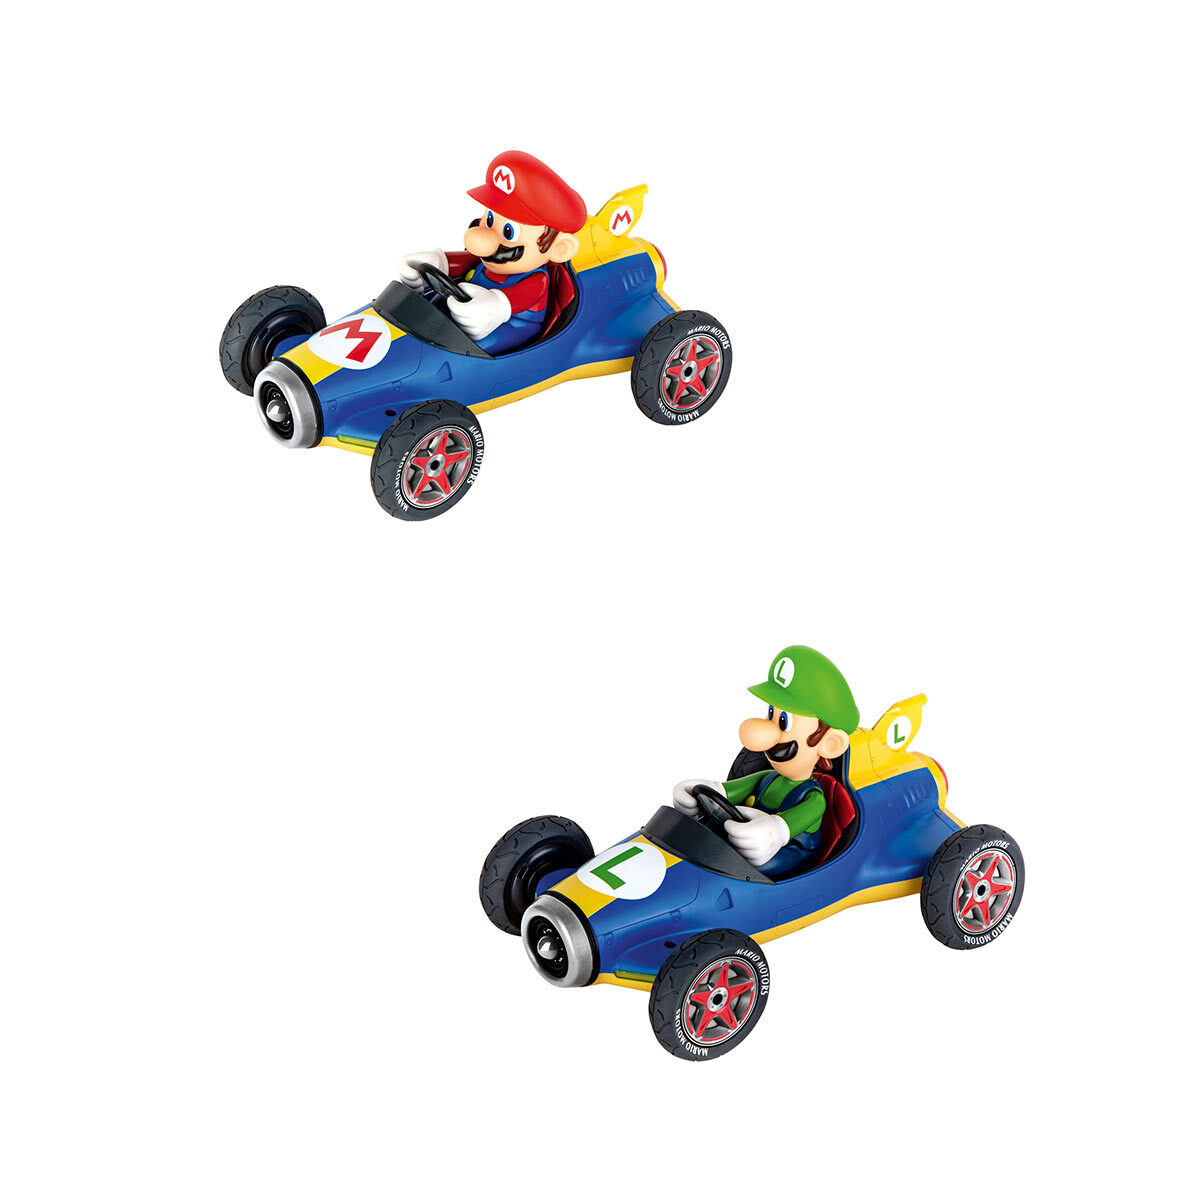 Mario Kart mario and luigi RC cars twin pack on white background